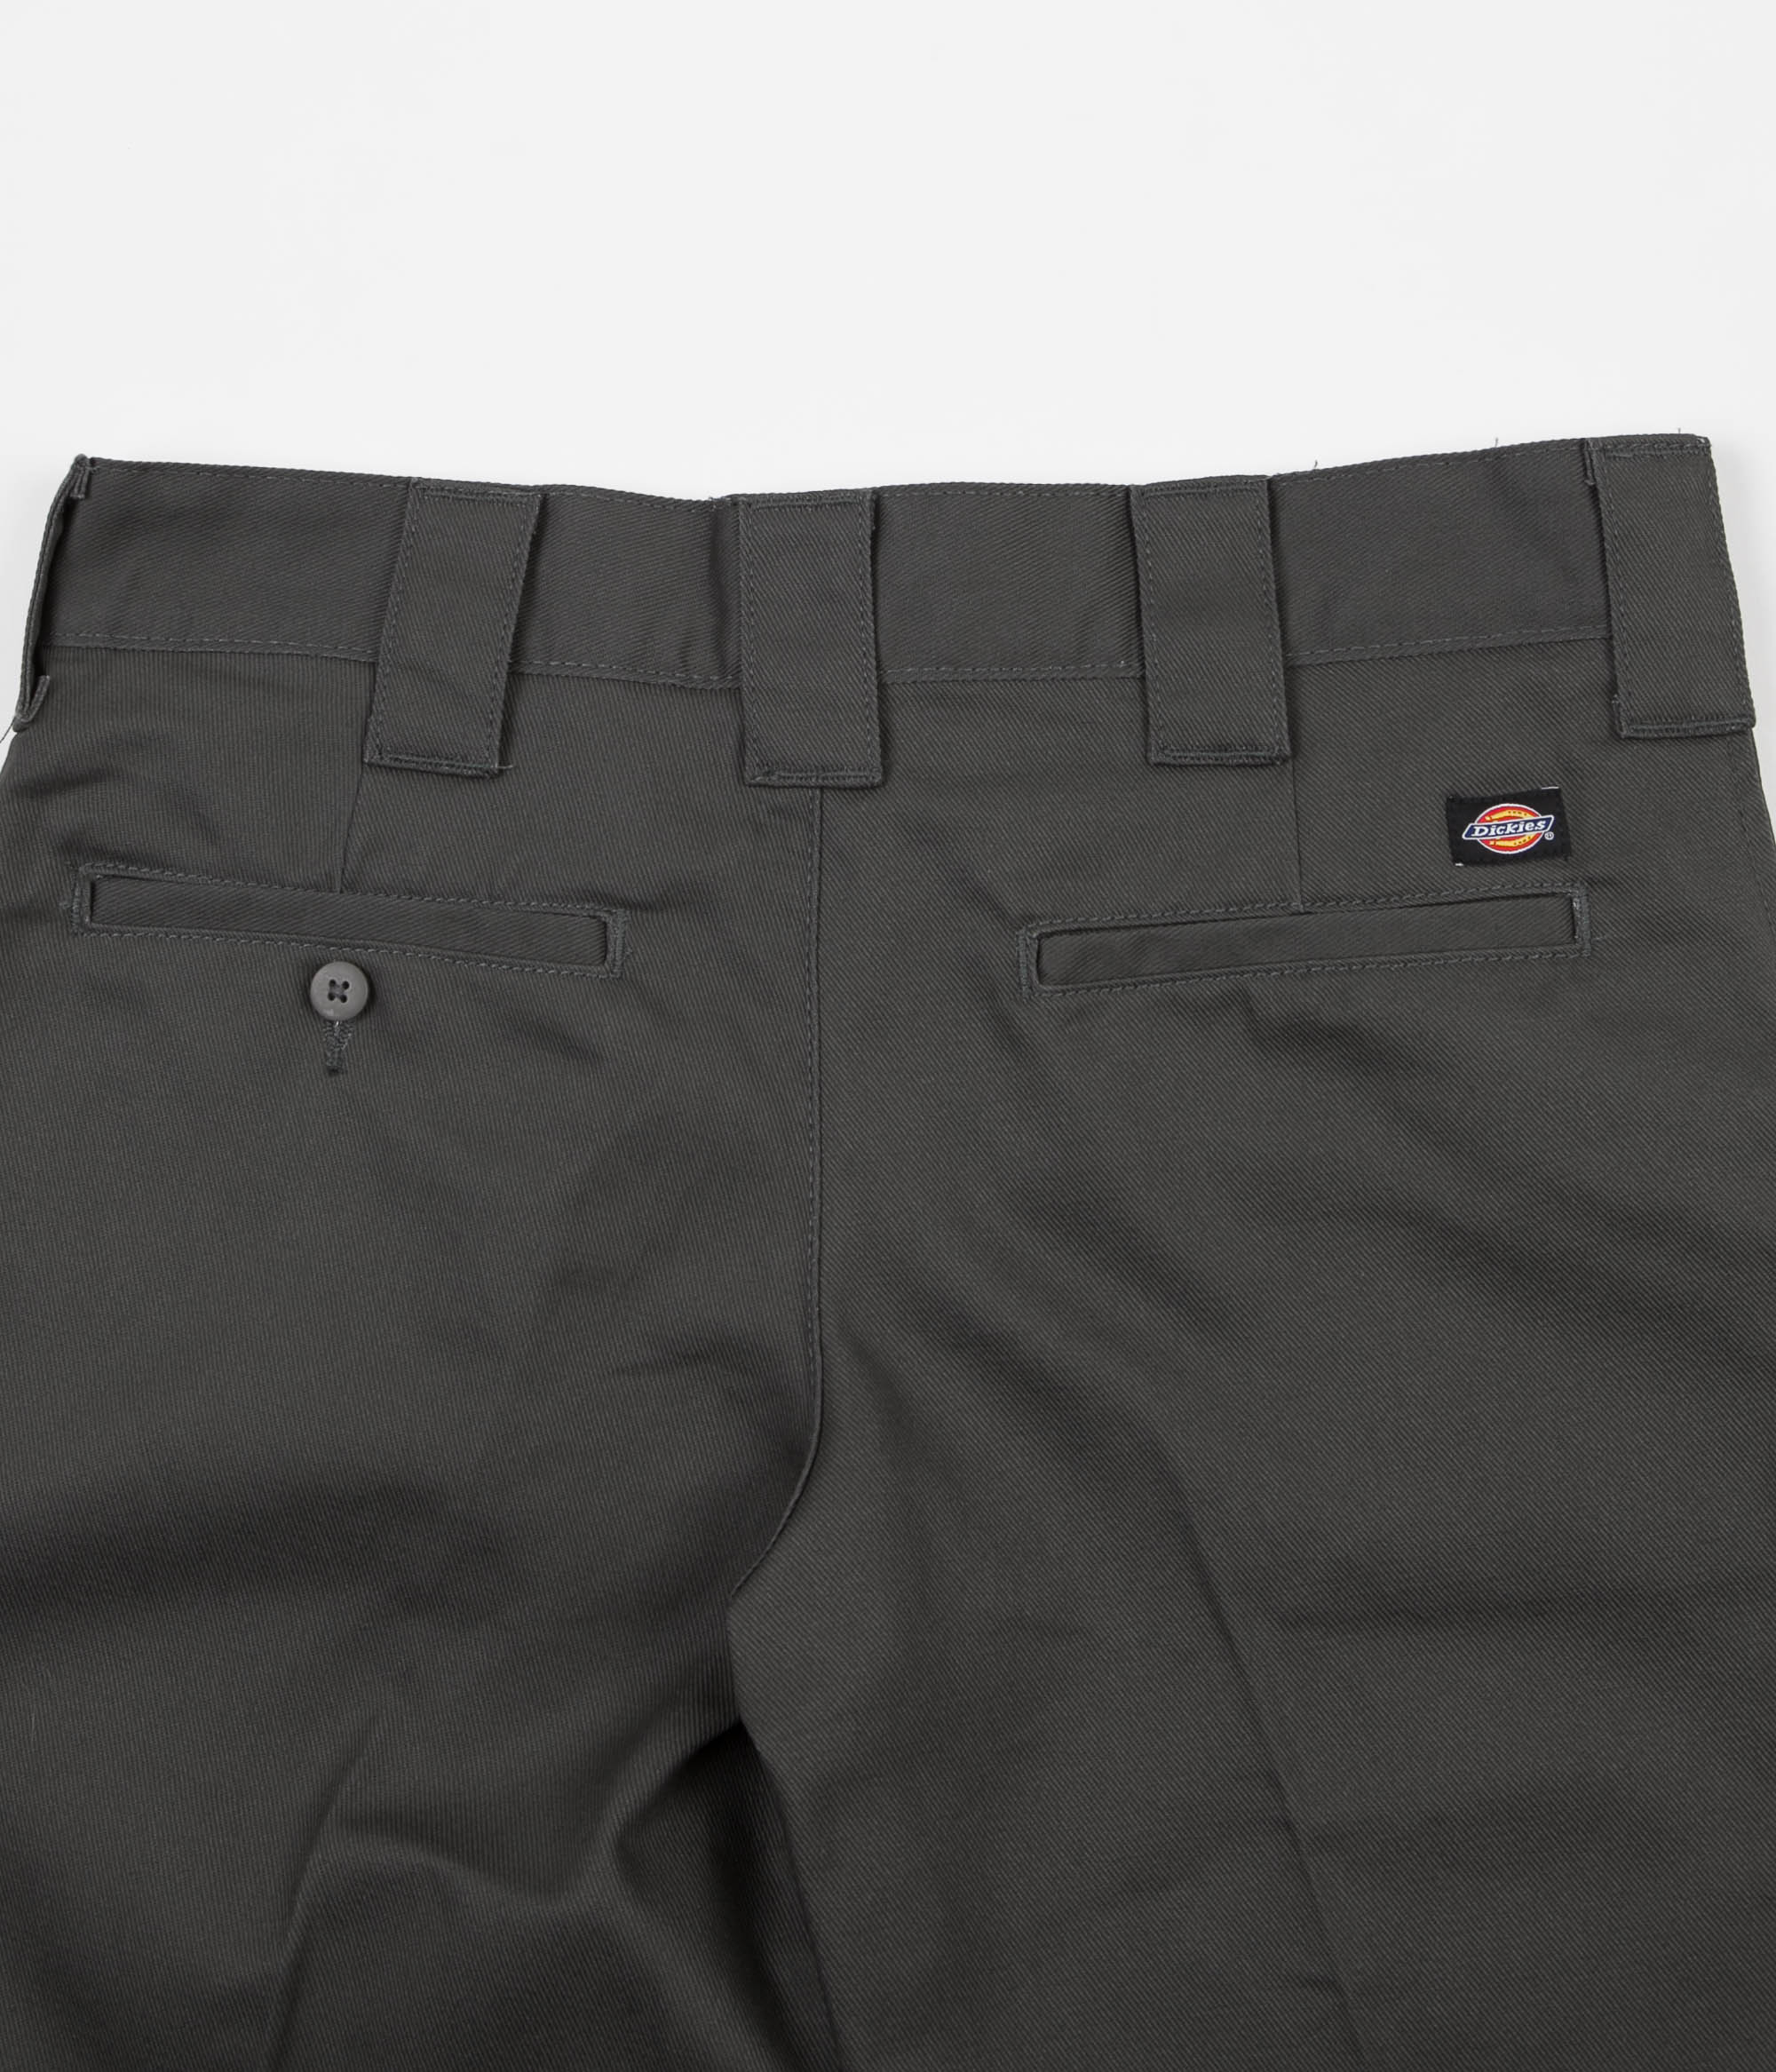 Dickies 873 Work Shorts - Charcoal Grey | Flatspot